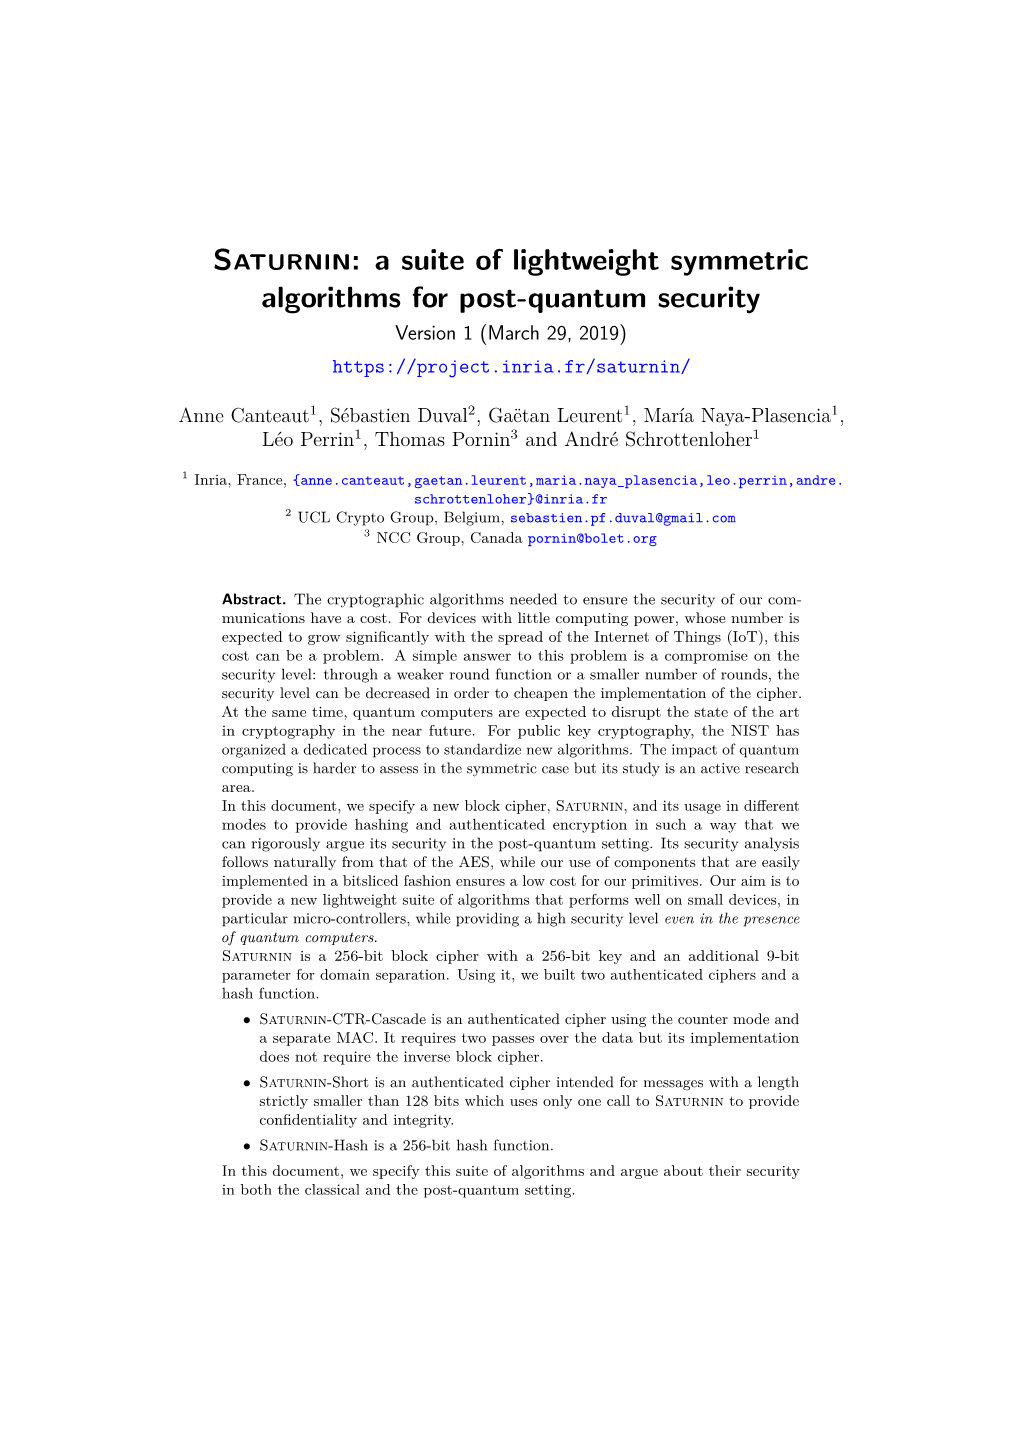 Saturnin: a Suite of Lightweight Symmetric Algorithms for Post-Quantum Security Version 1 (March 29, 2019)